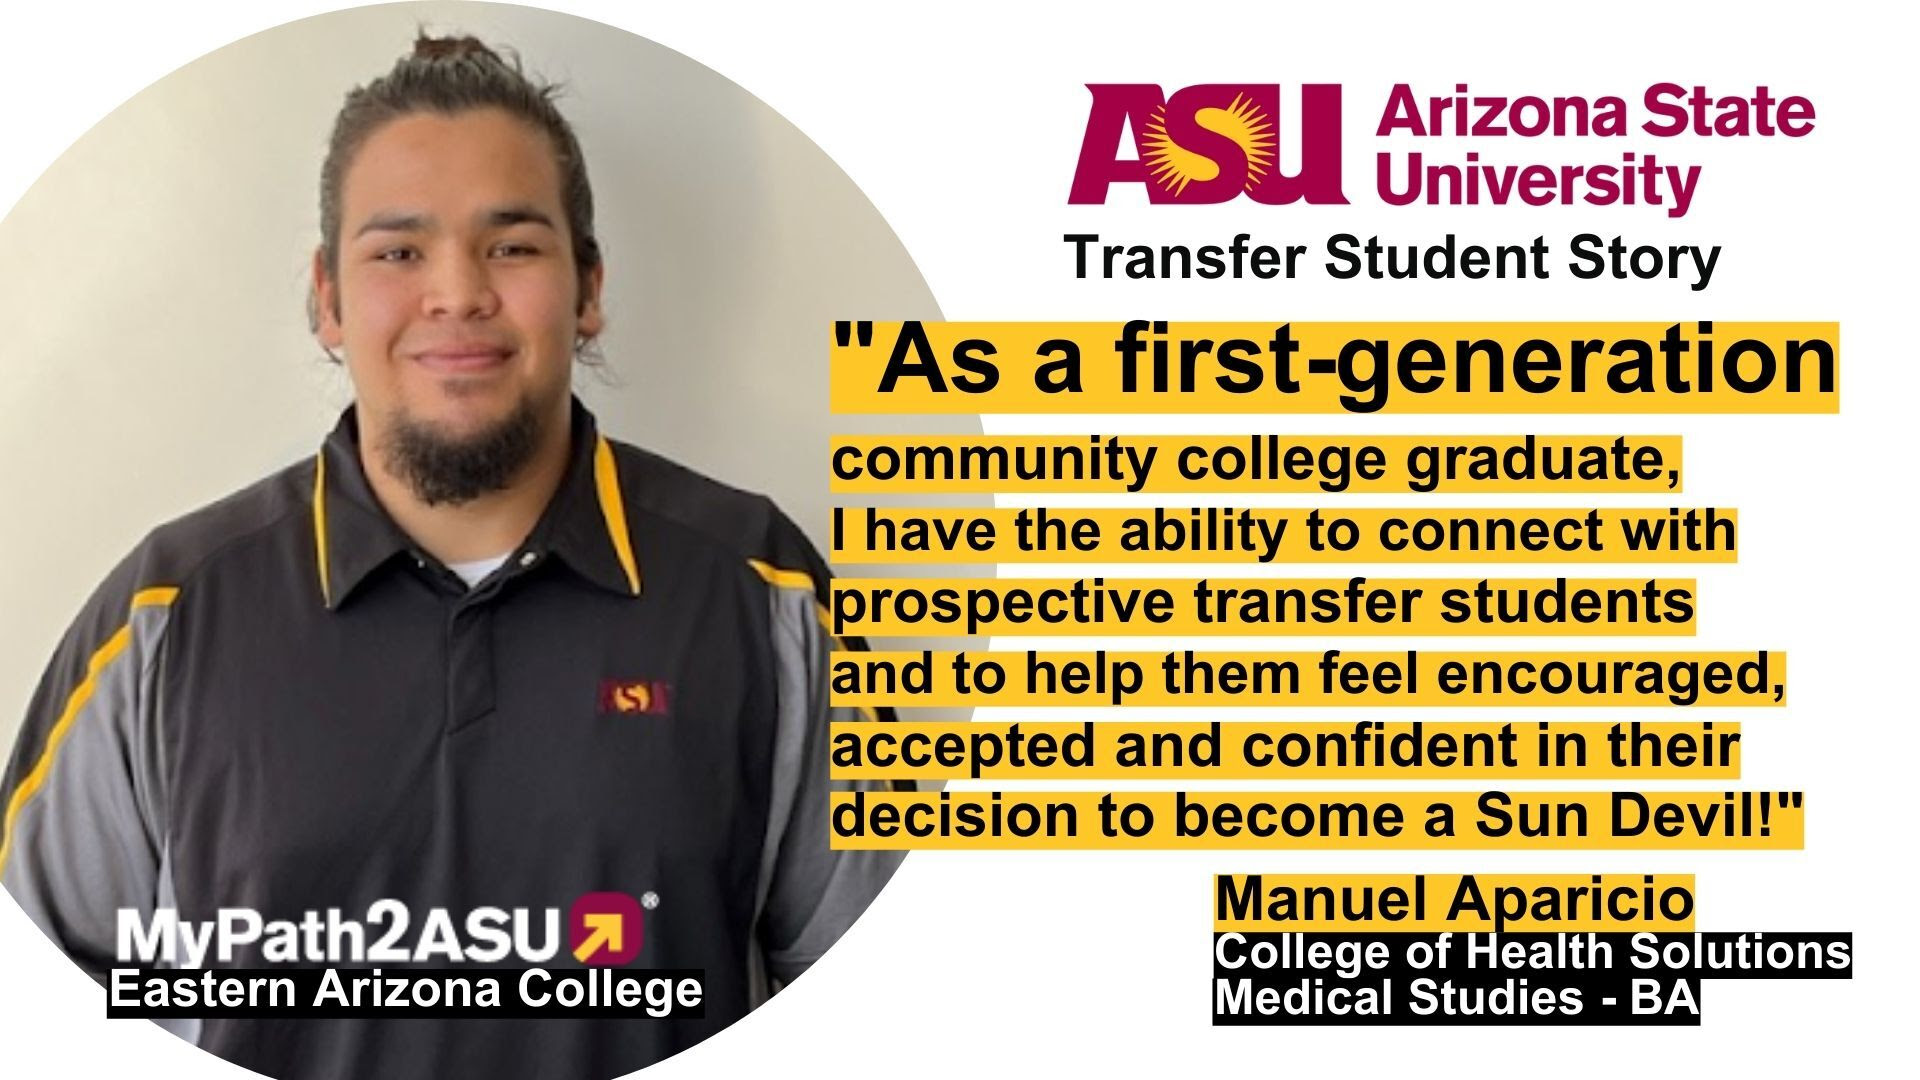 ASU transfer student Manuel Aparicio with a quote